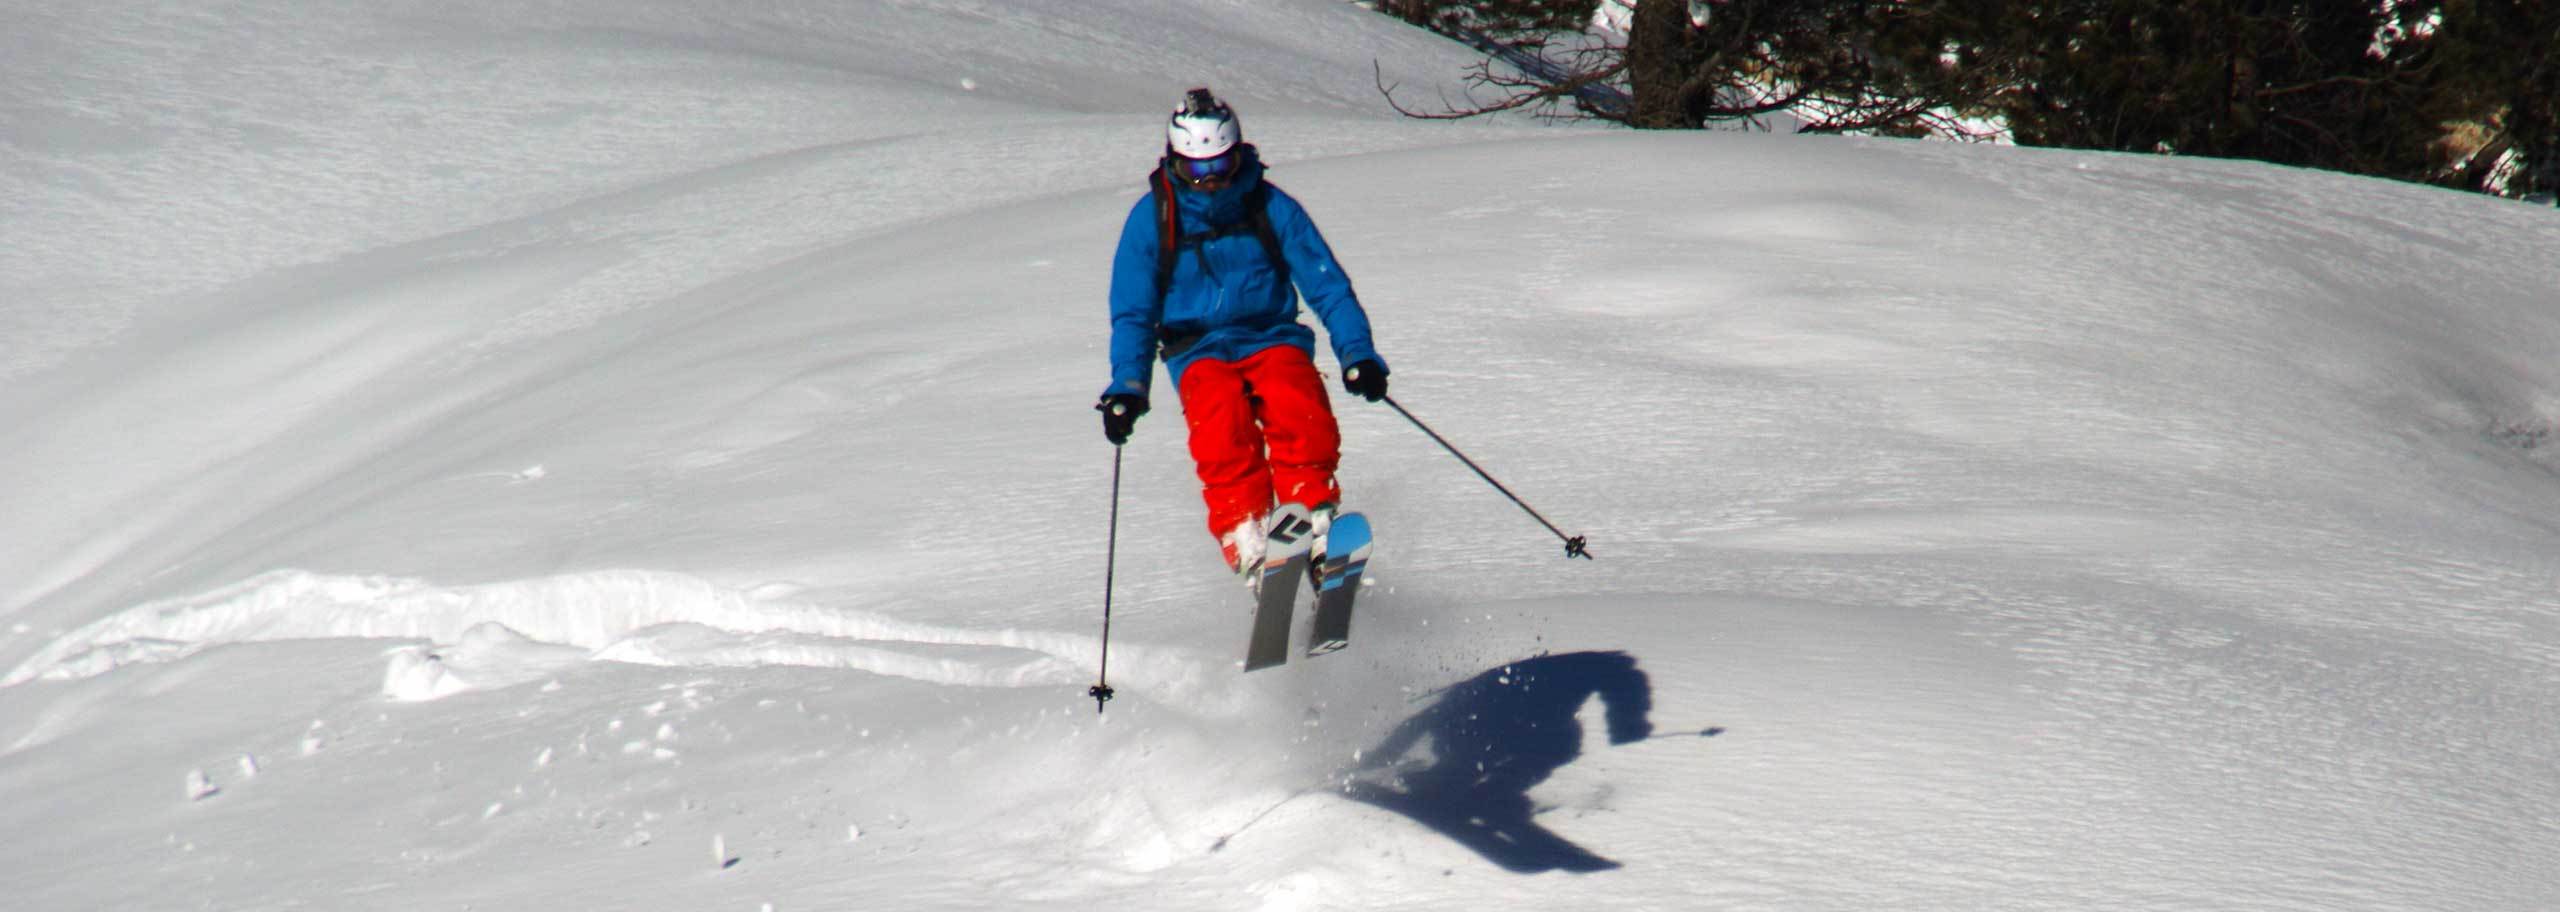 Monte Rosa Off-piste Skiing, Guided Freeride Skiing